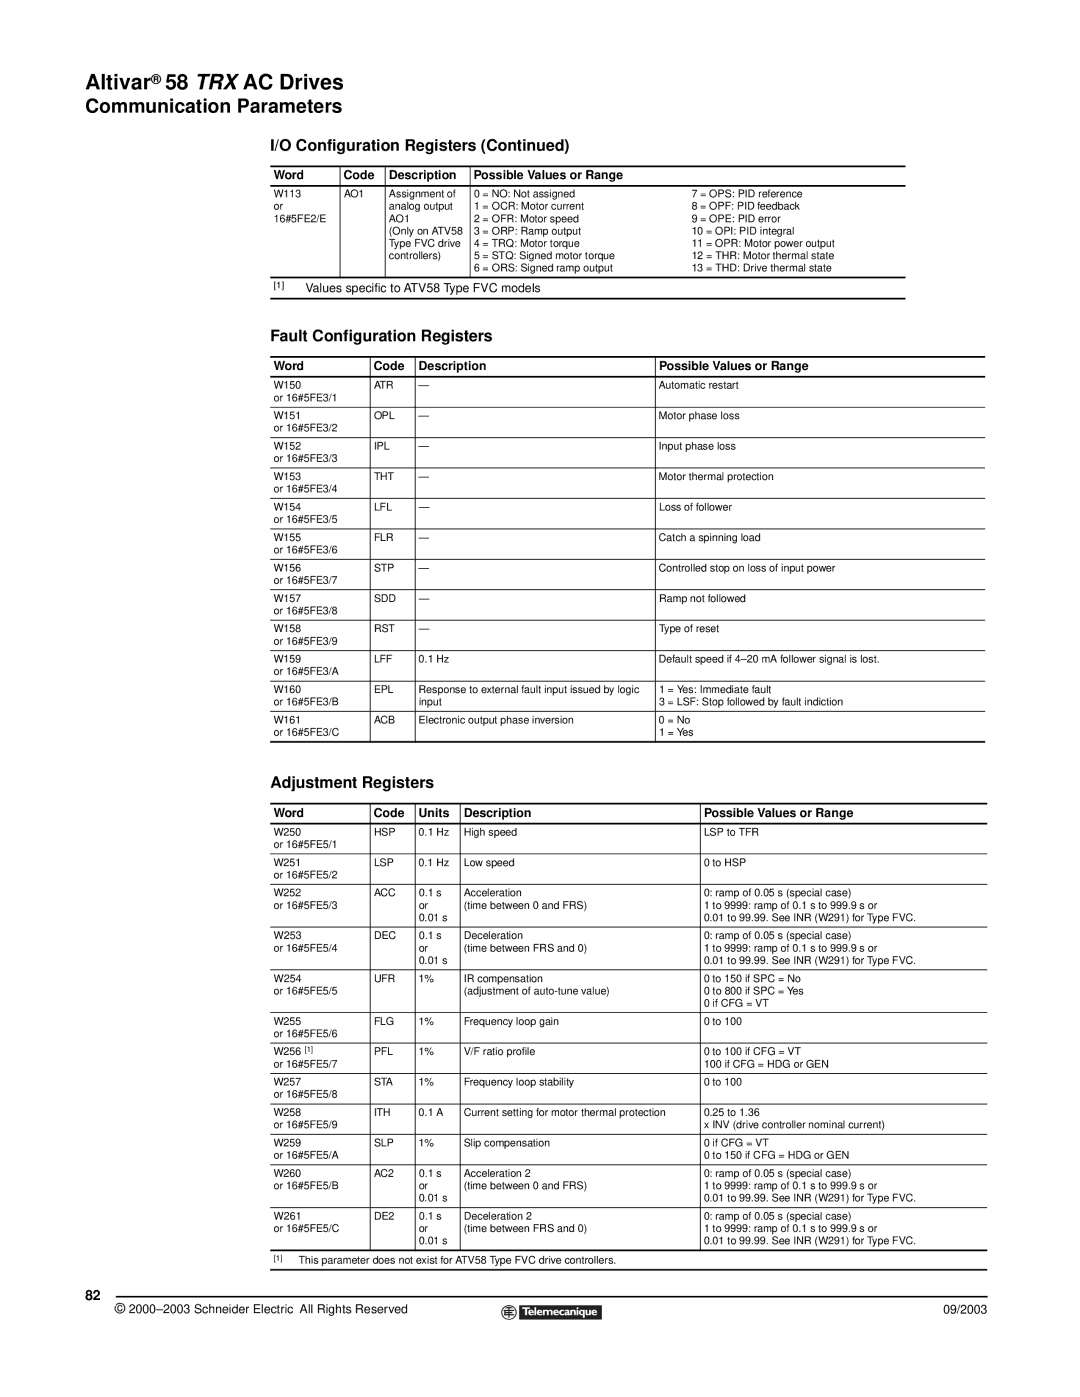 Schneider Electric 58 TRX manual Fault Configuration Registers, Adjustment Registers 